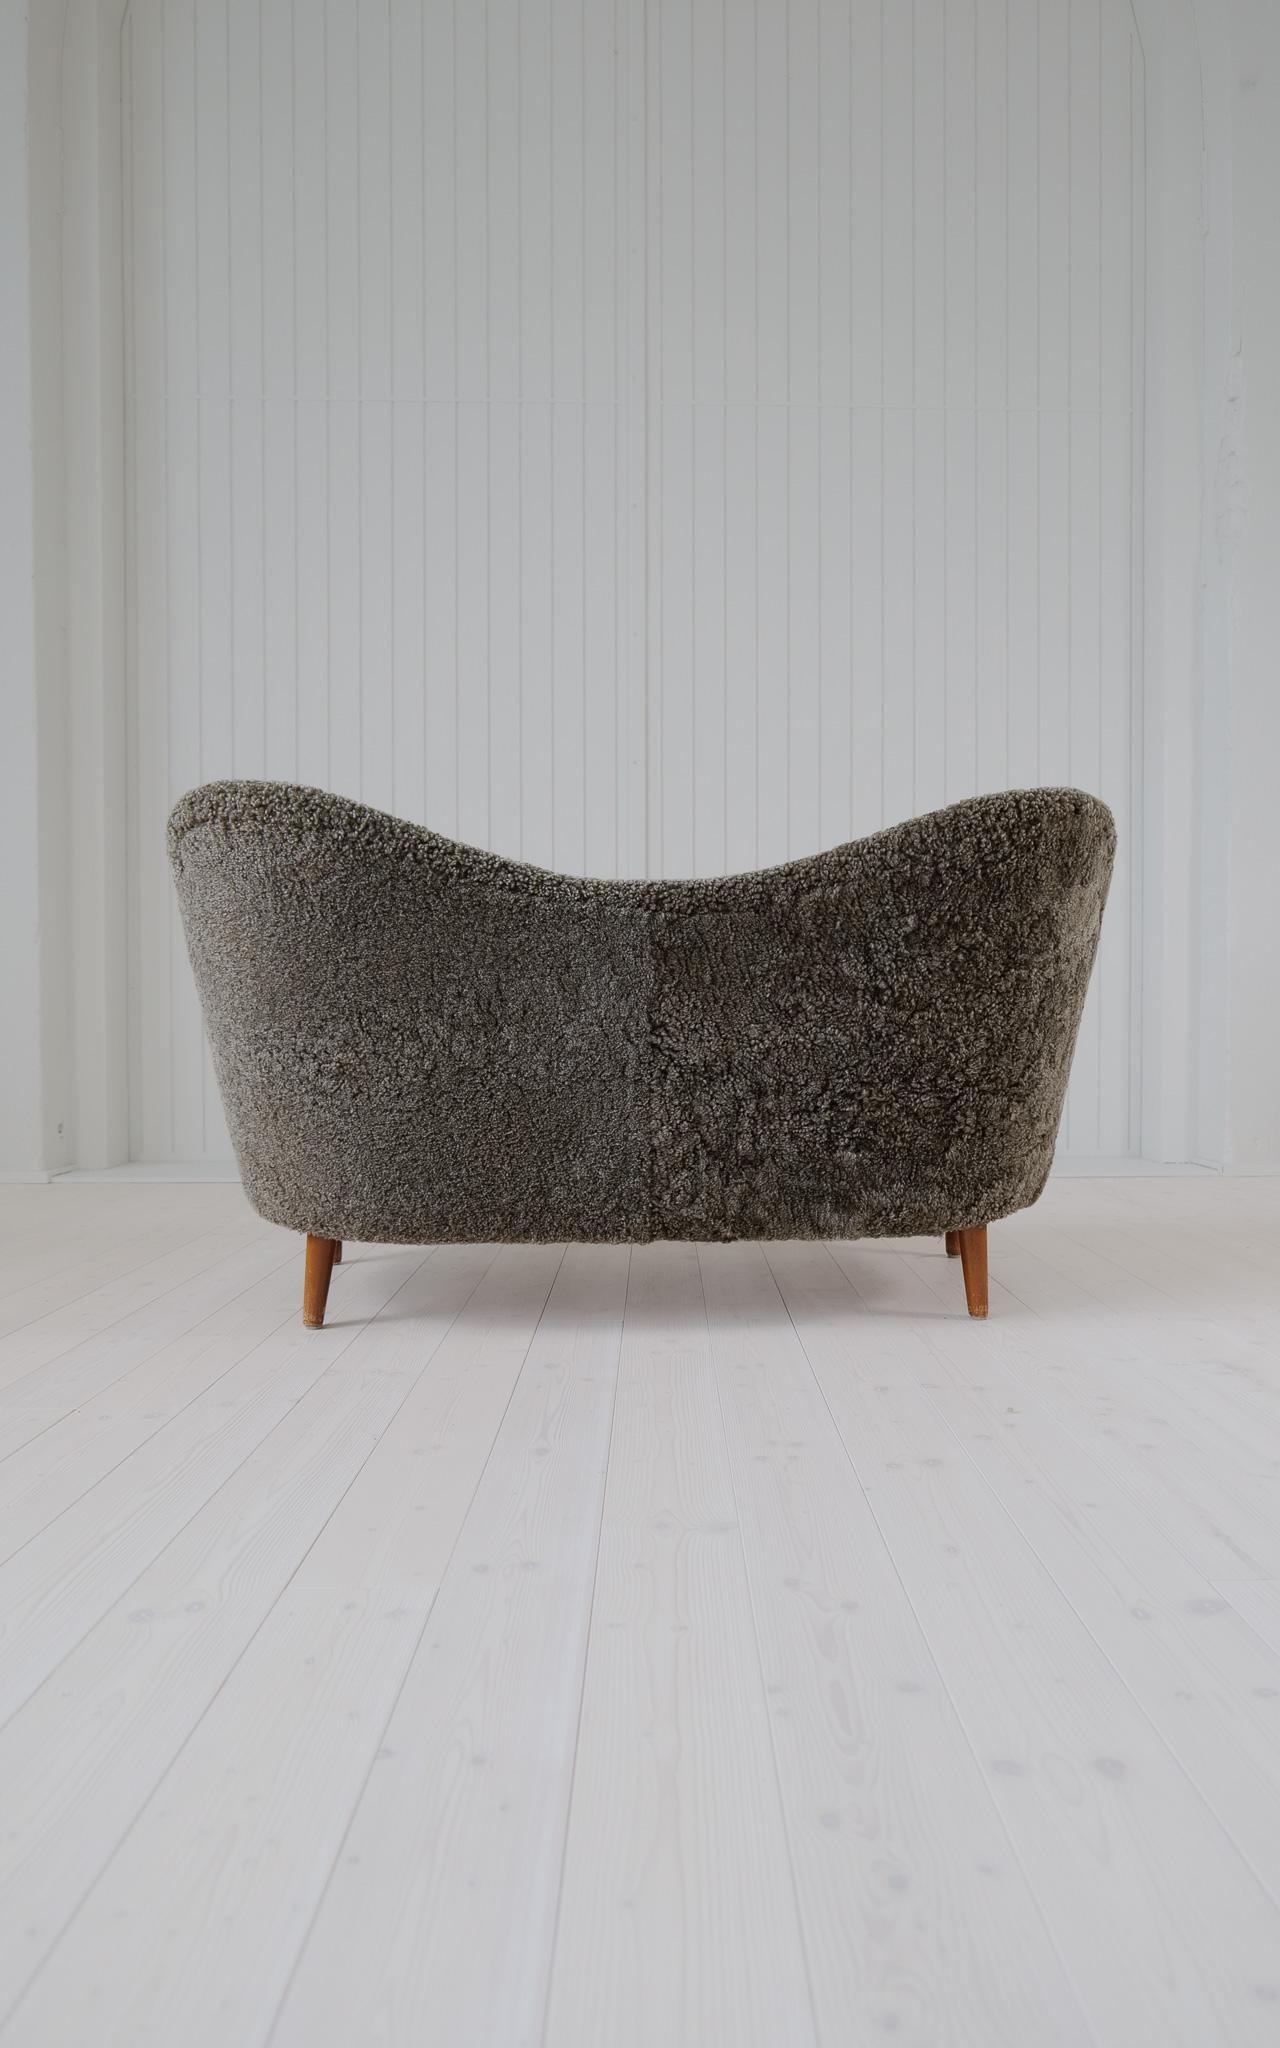 Midcentury Modern Sheepskin/Shearling Sofa Model 'Samspel